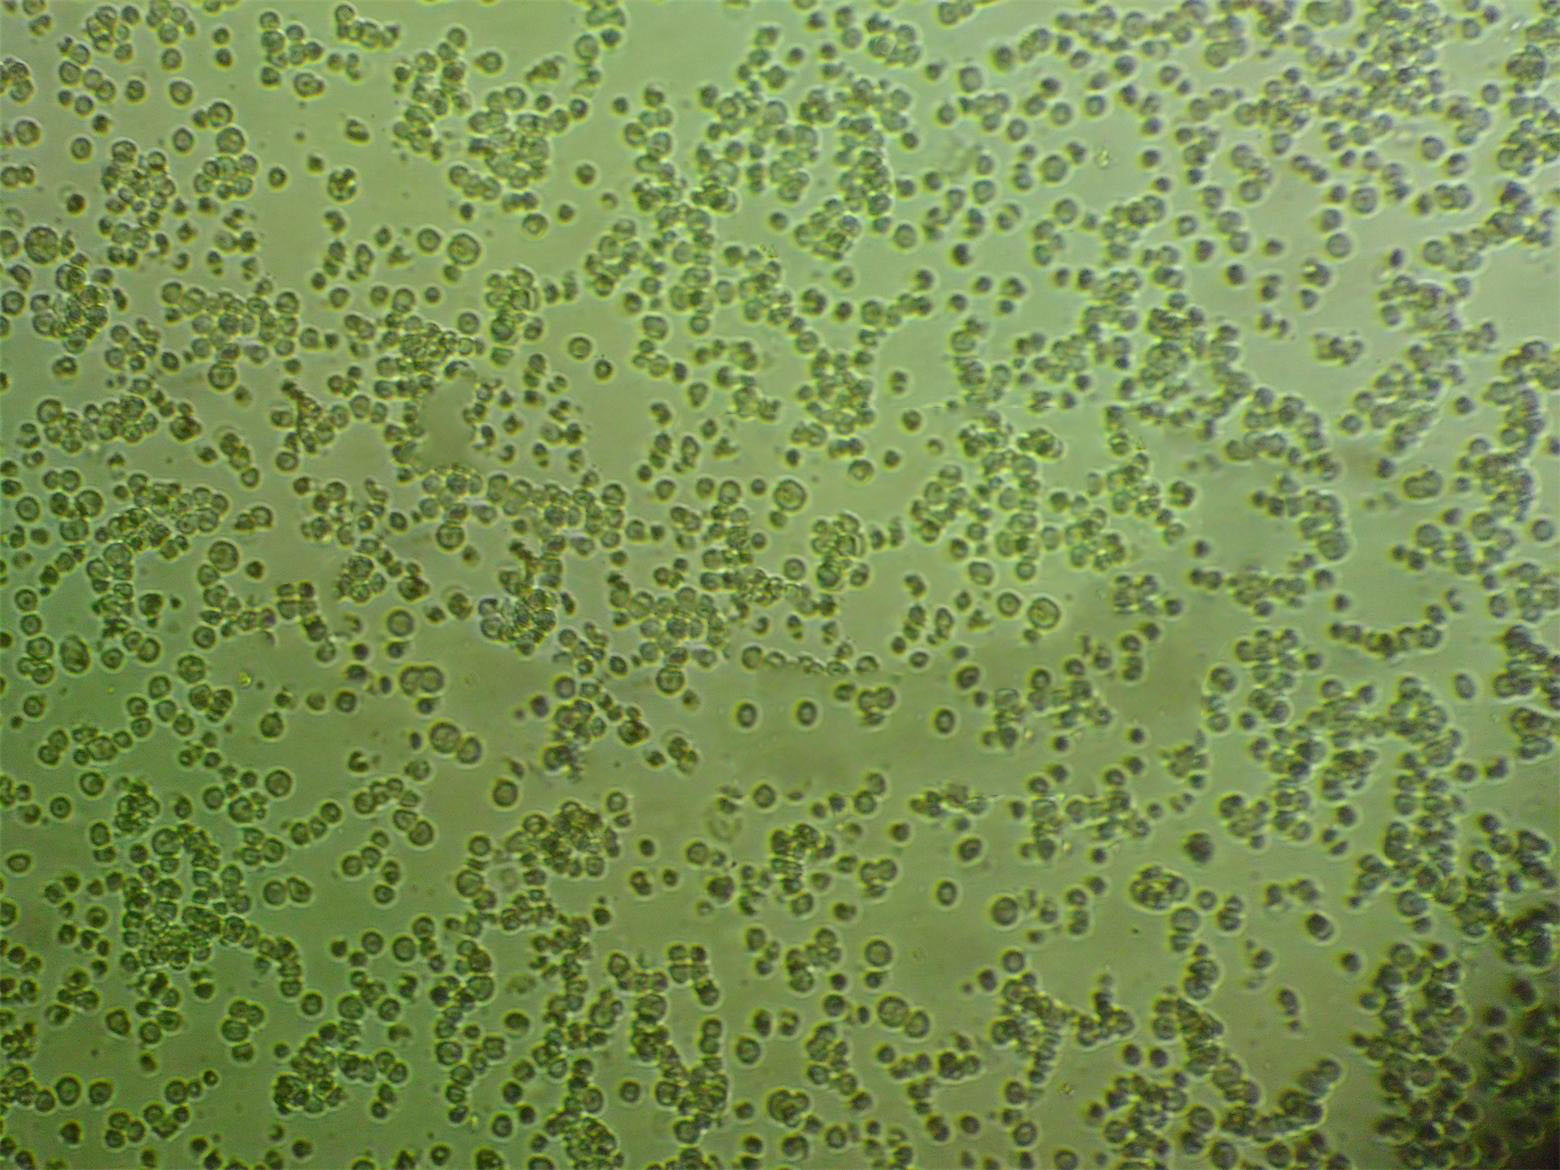 Kasumi-1 Cells|人红白血病可传代细胞系,Kasumi-1 Cells